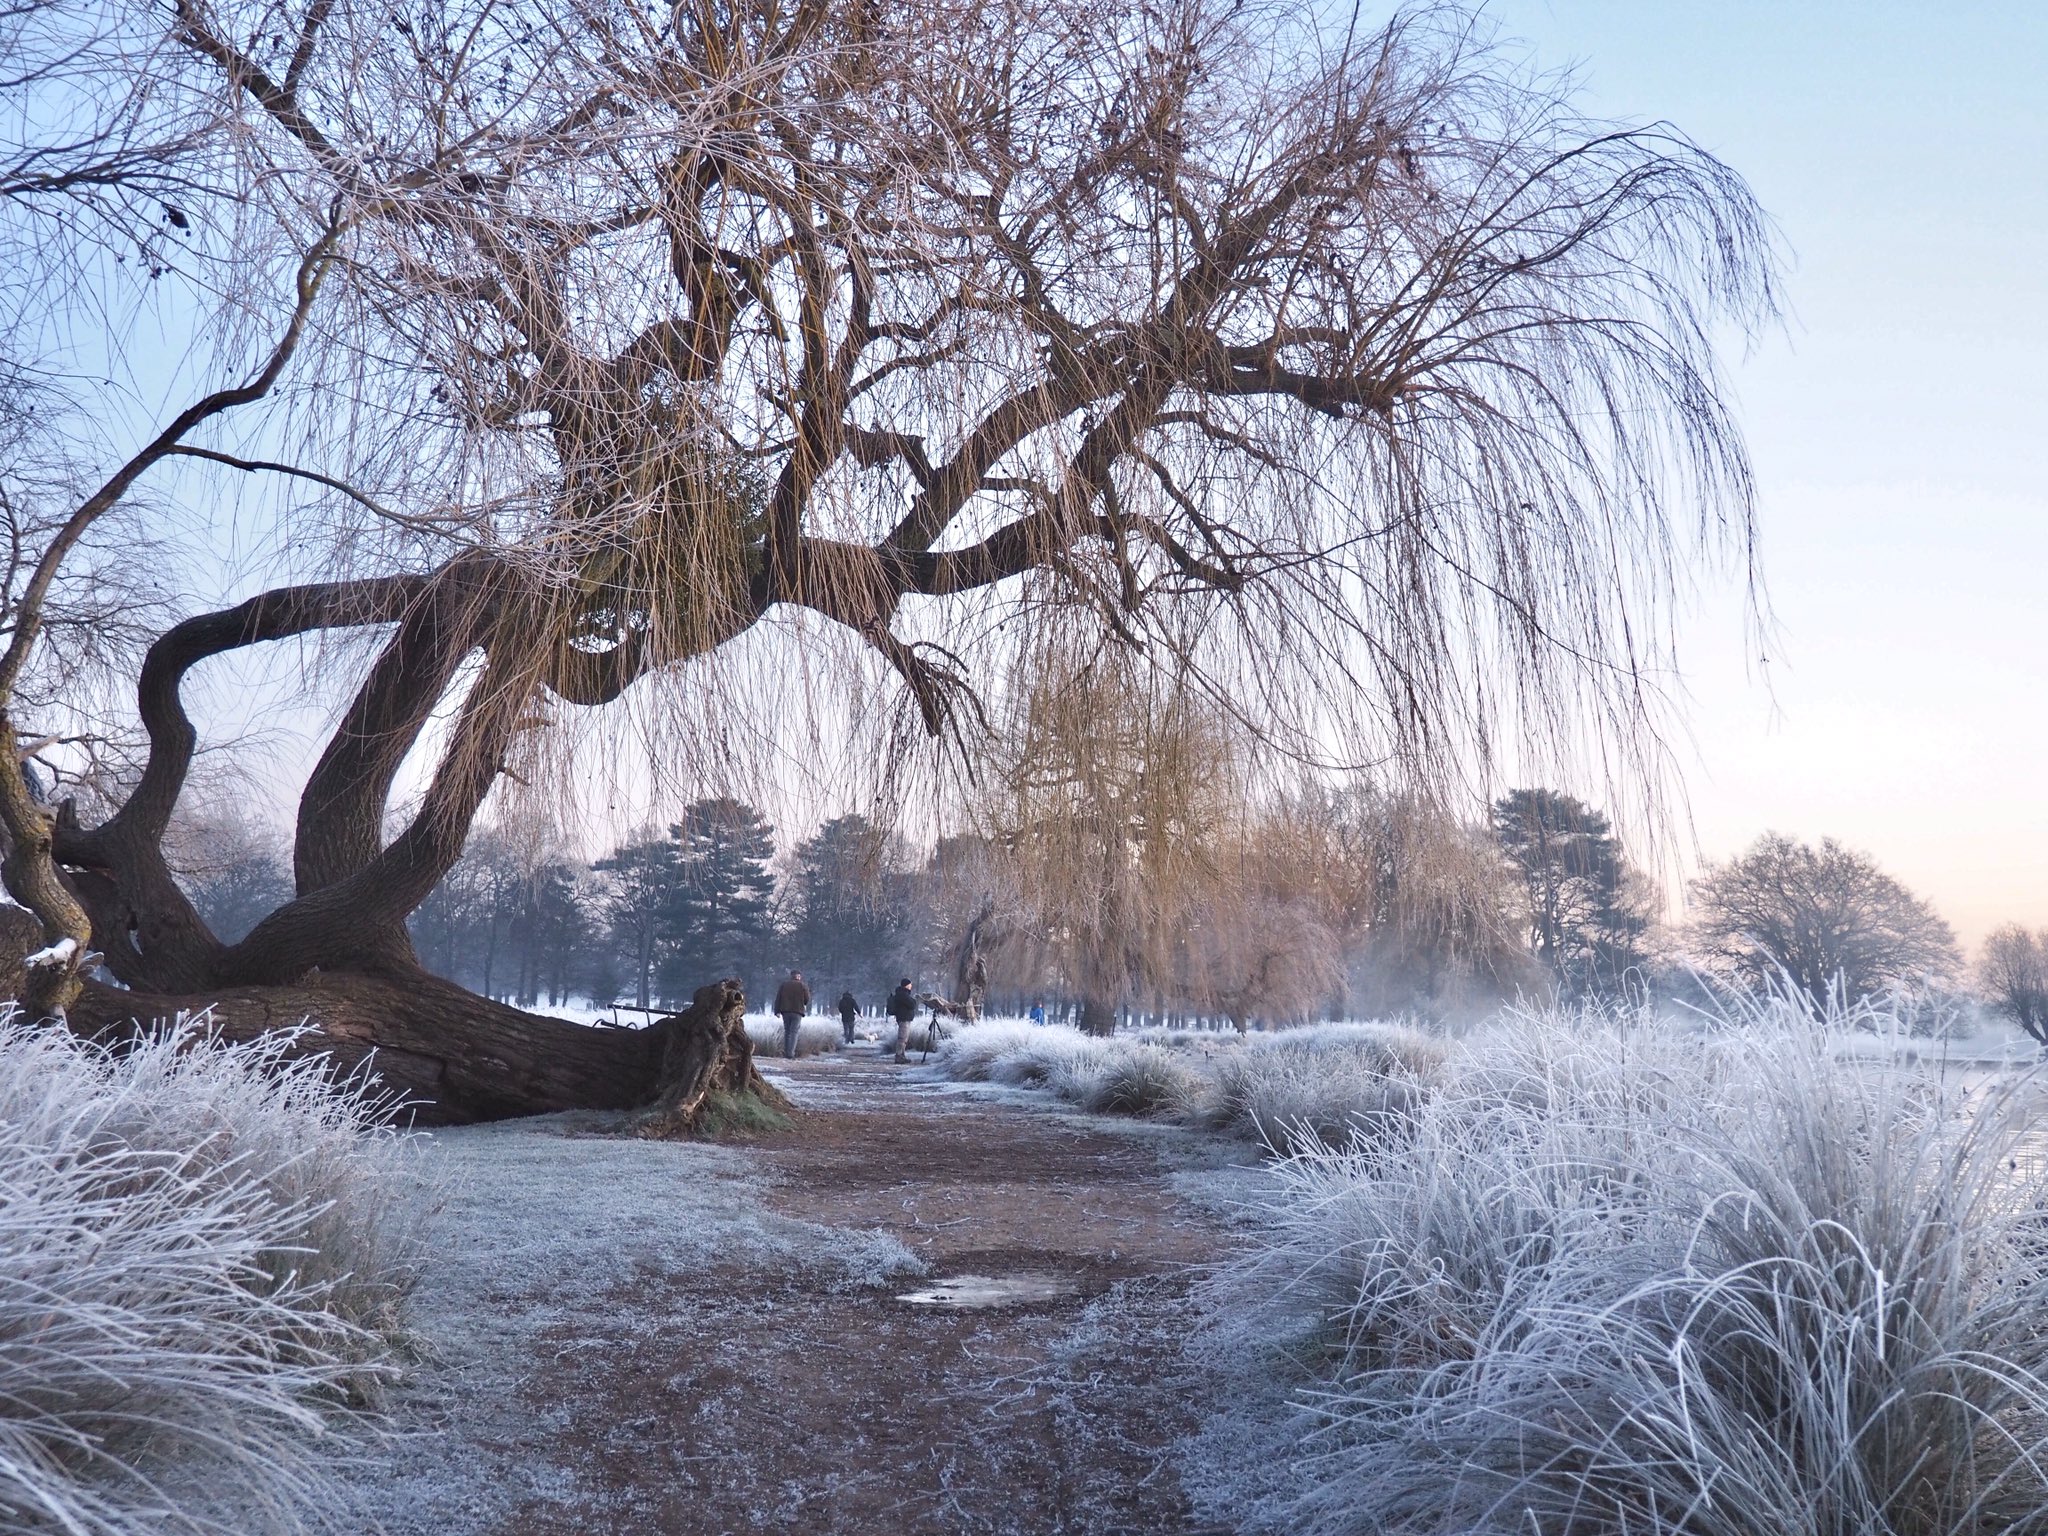 Winter wonderland at Bushy Park Teddington by Ruth Wadey @ruths_gallery